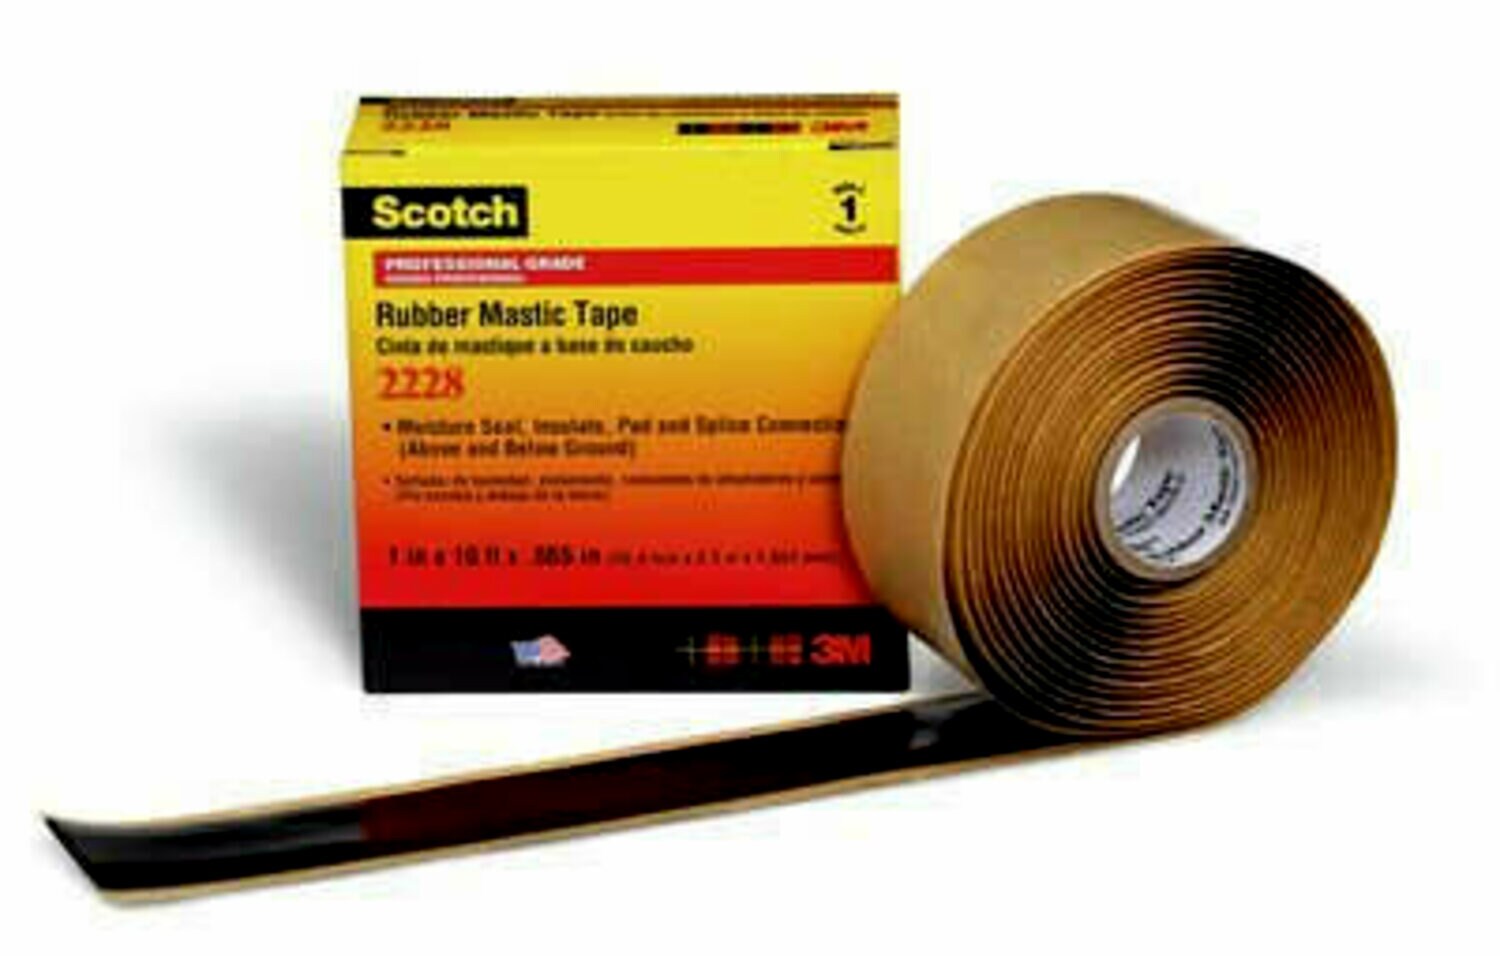 7100005959 - Scotch Rubber Mastic Tape 2228, 2 in x 3 ft, Black, 1 roll/carton, 48
rolls/Case